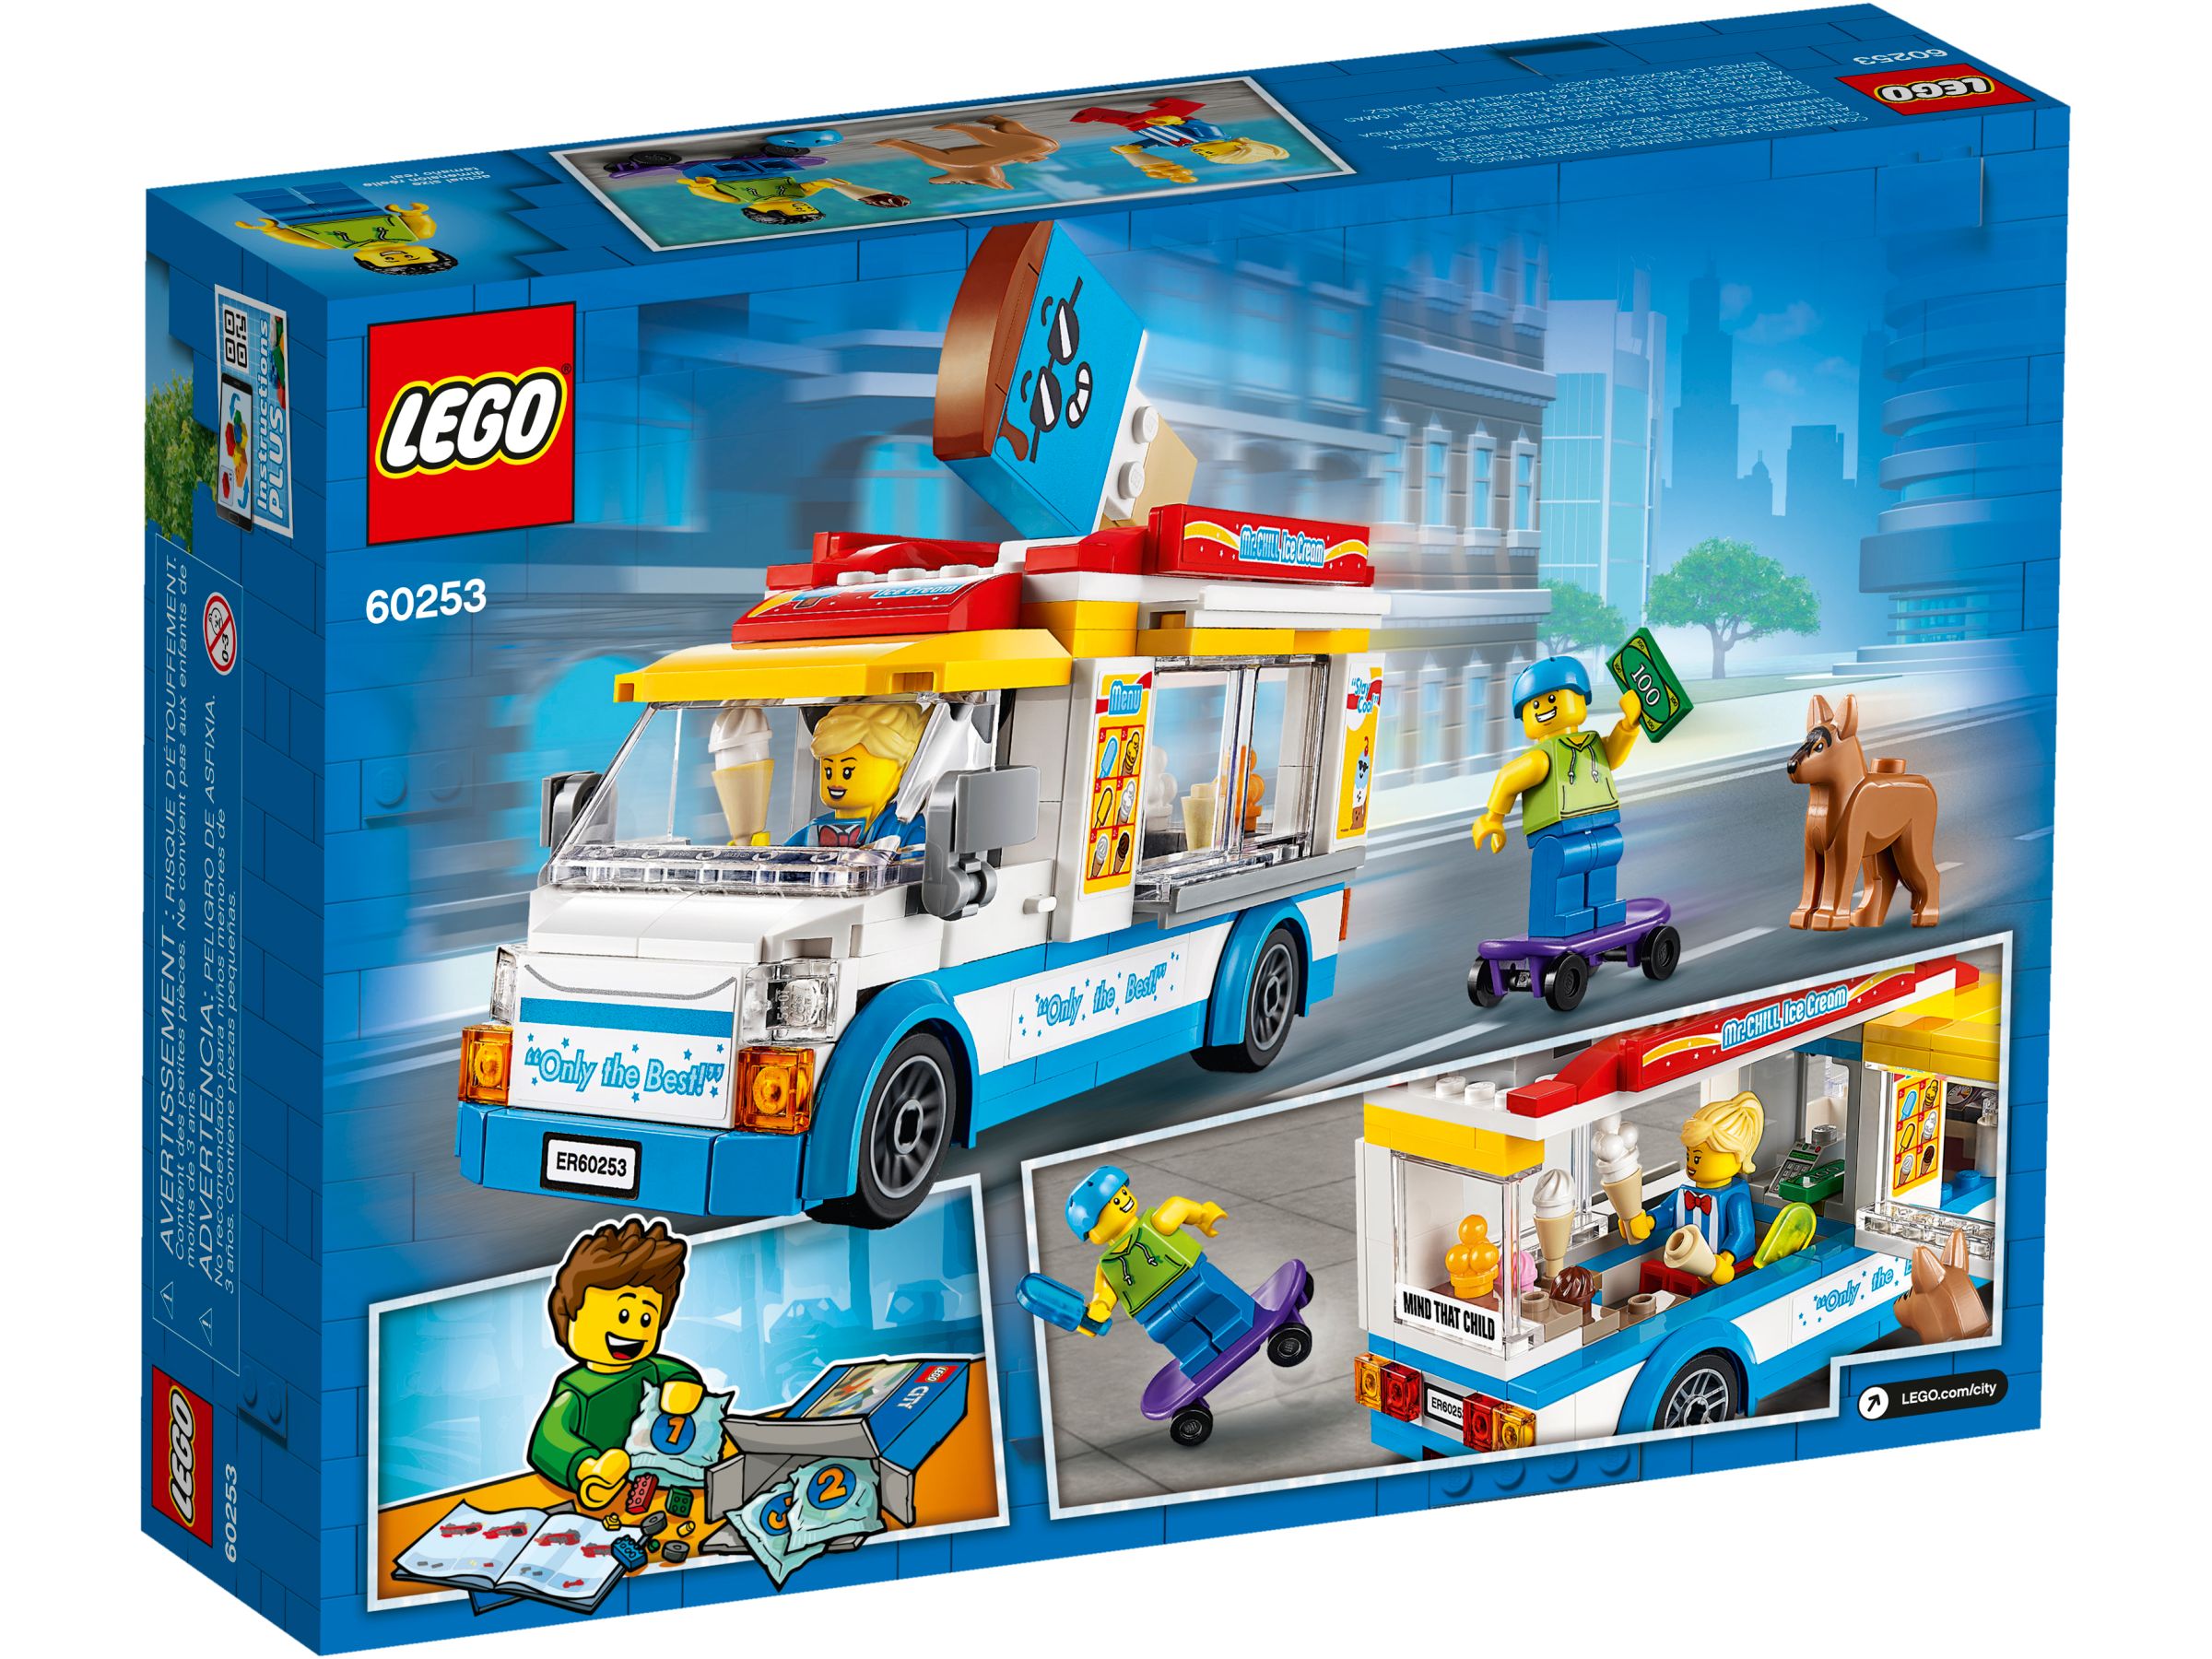 LEGO City 60253 Eiswagen LEGO_60253_alt4.jpg